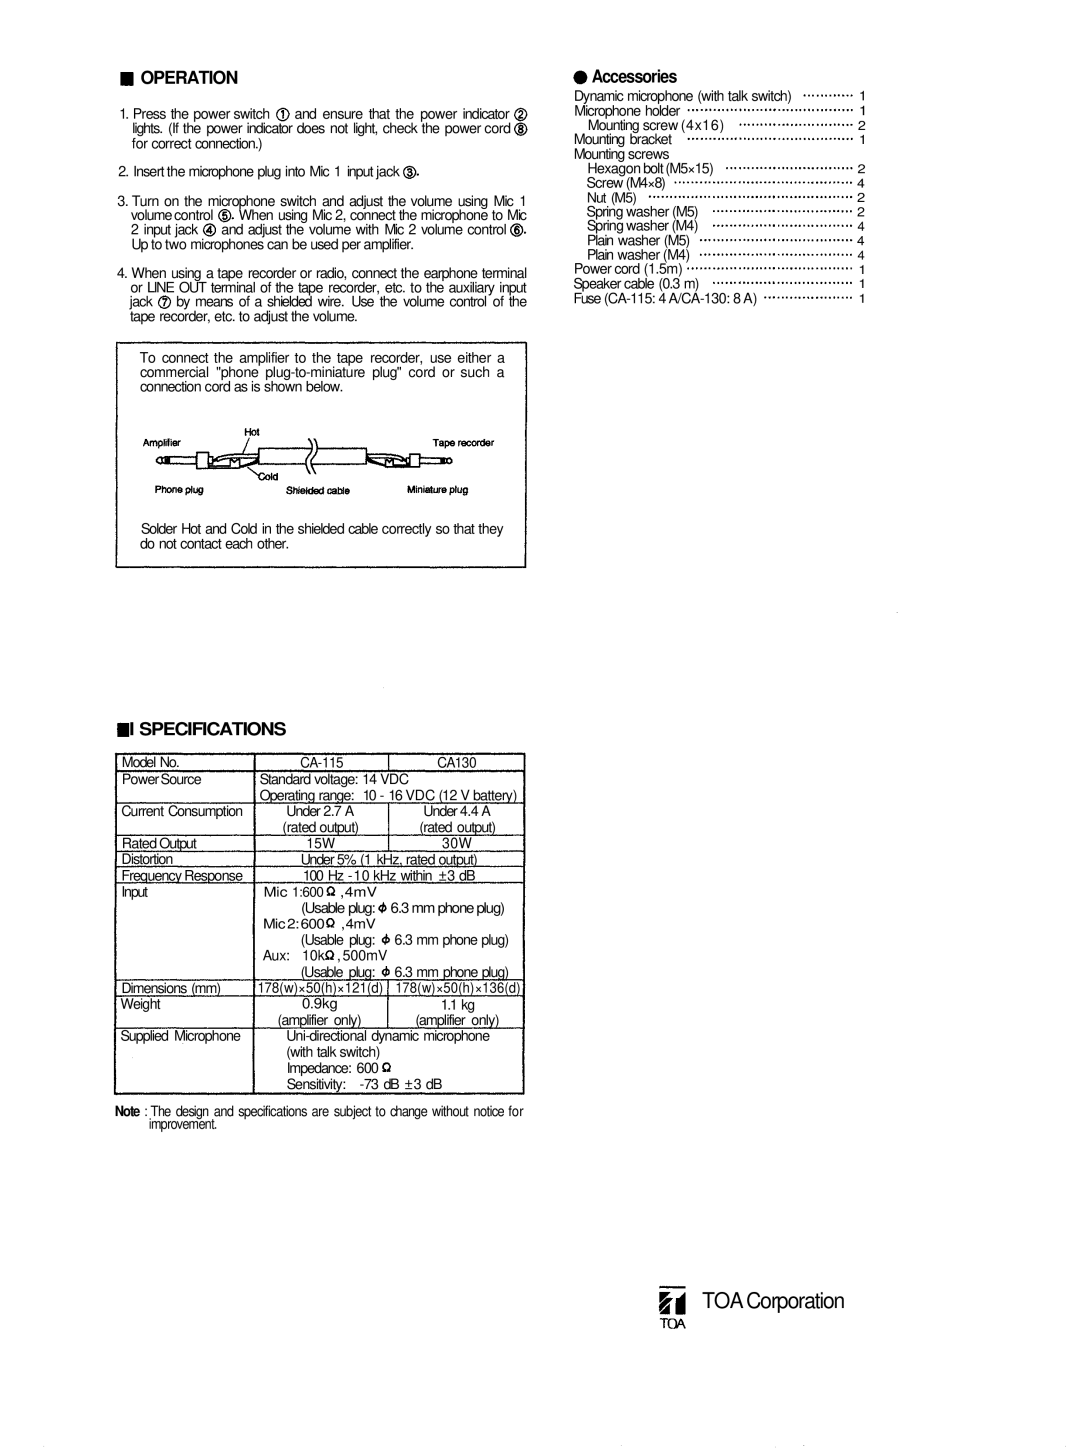 Vizio CA-115 instruction manual Operation, Accessories, I Specifications, TOA Corporation 